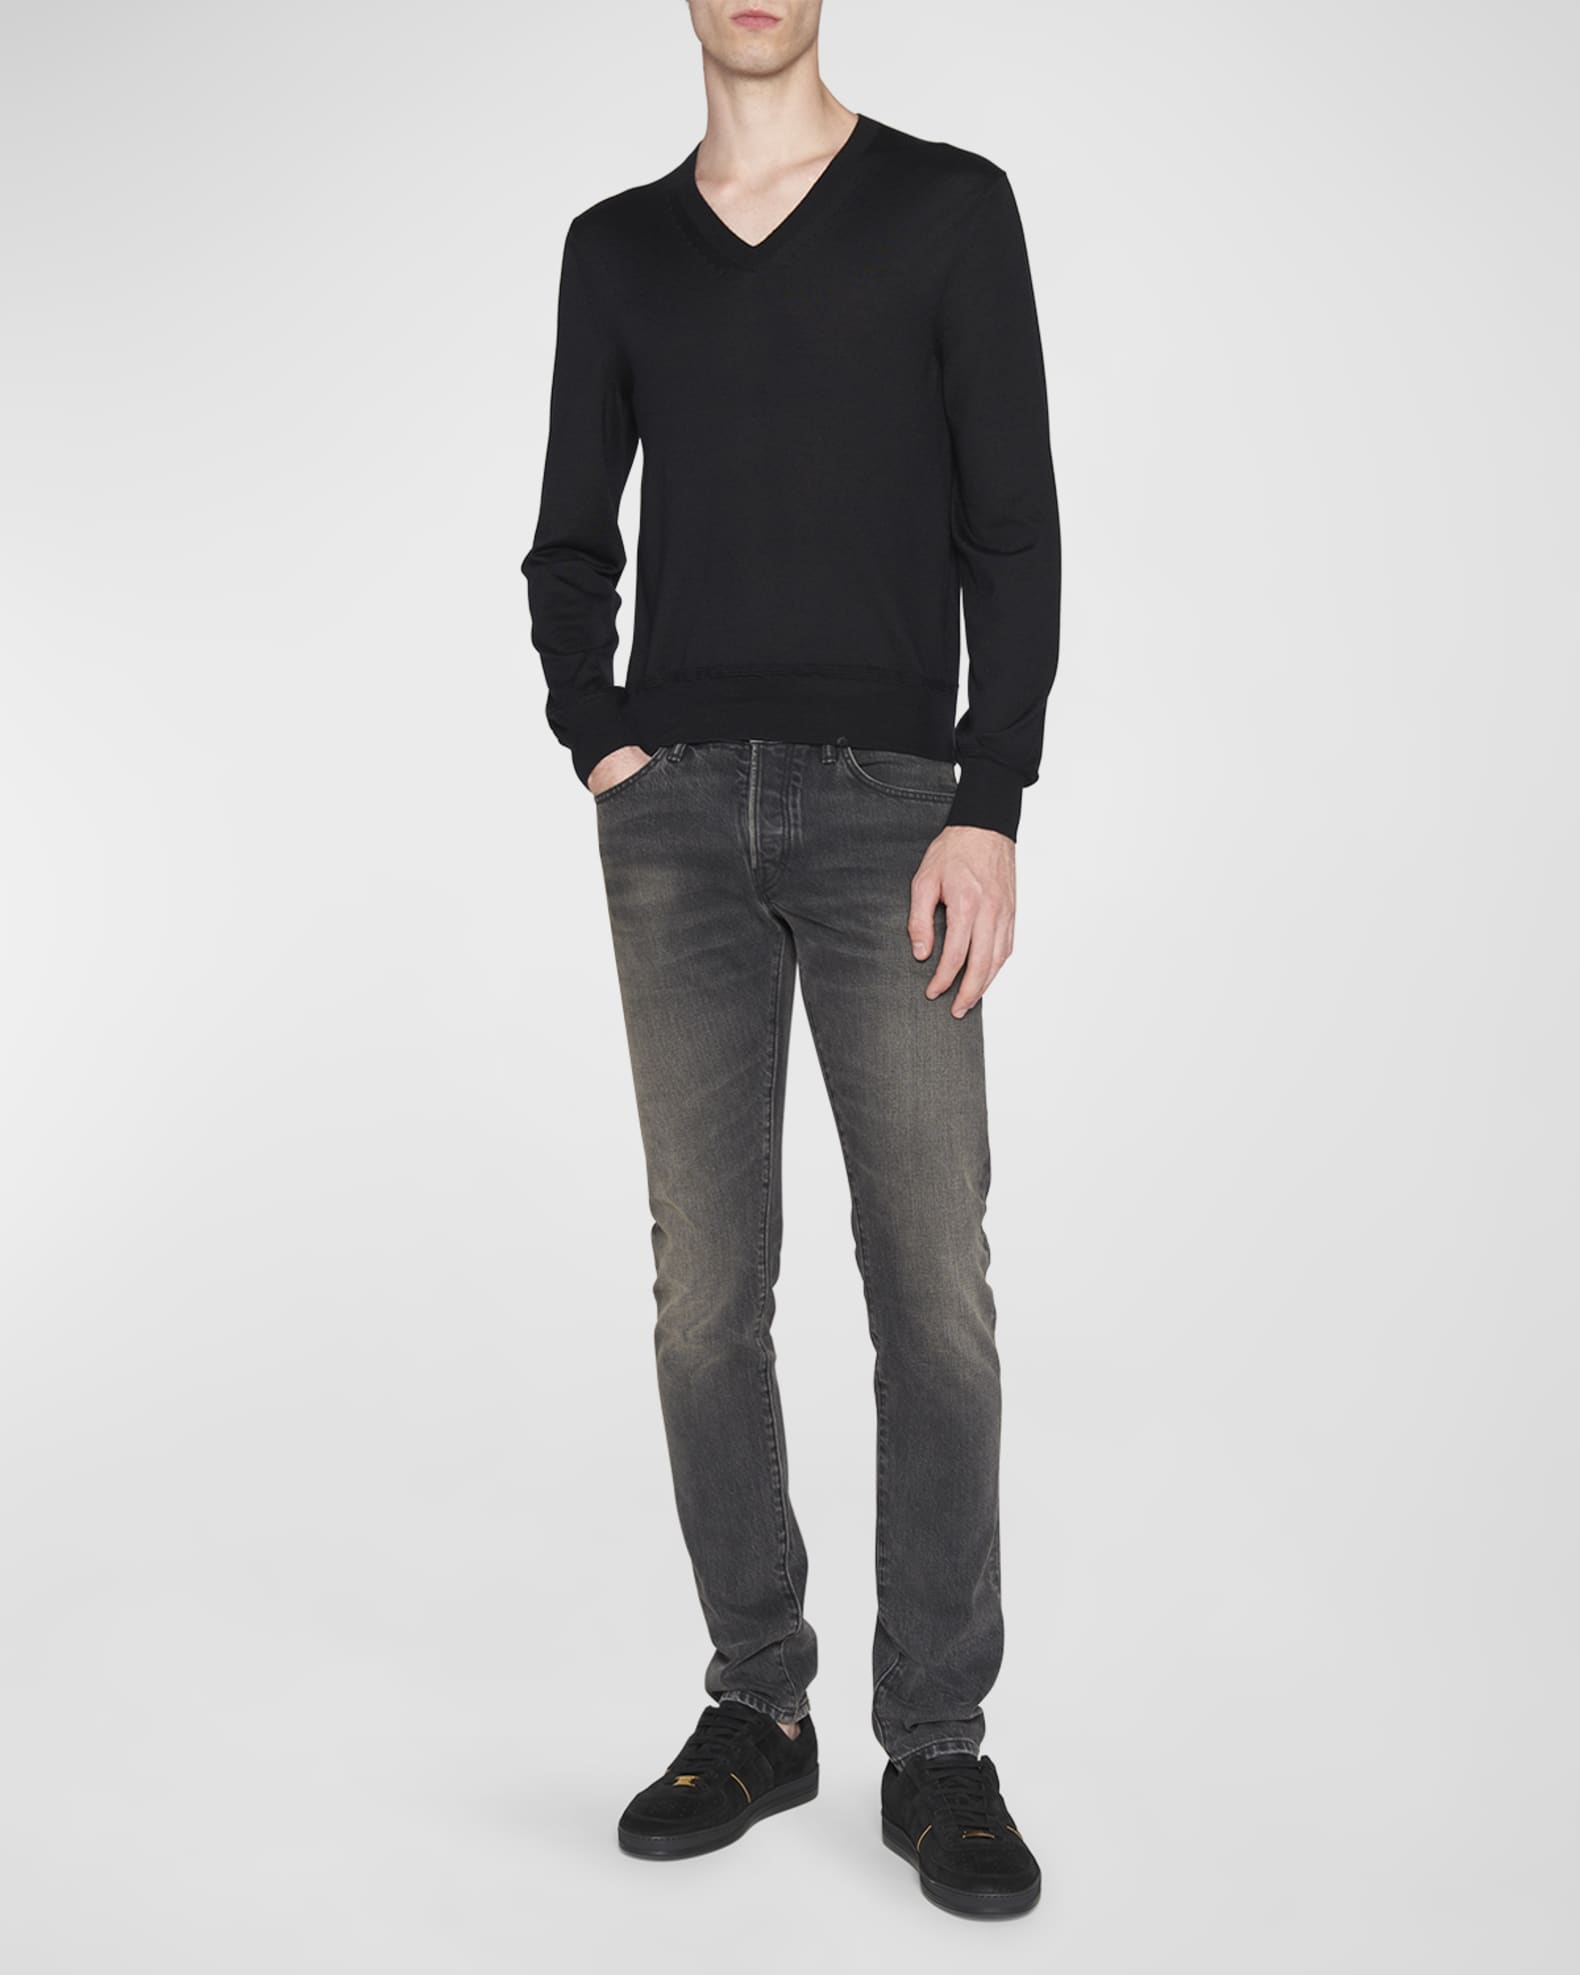 TOM FORD Men's Slim Fit Black Wash Jeans | Neiman Marcus